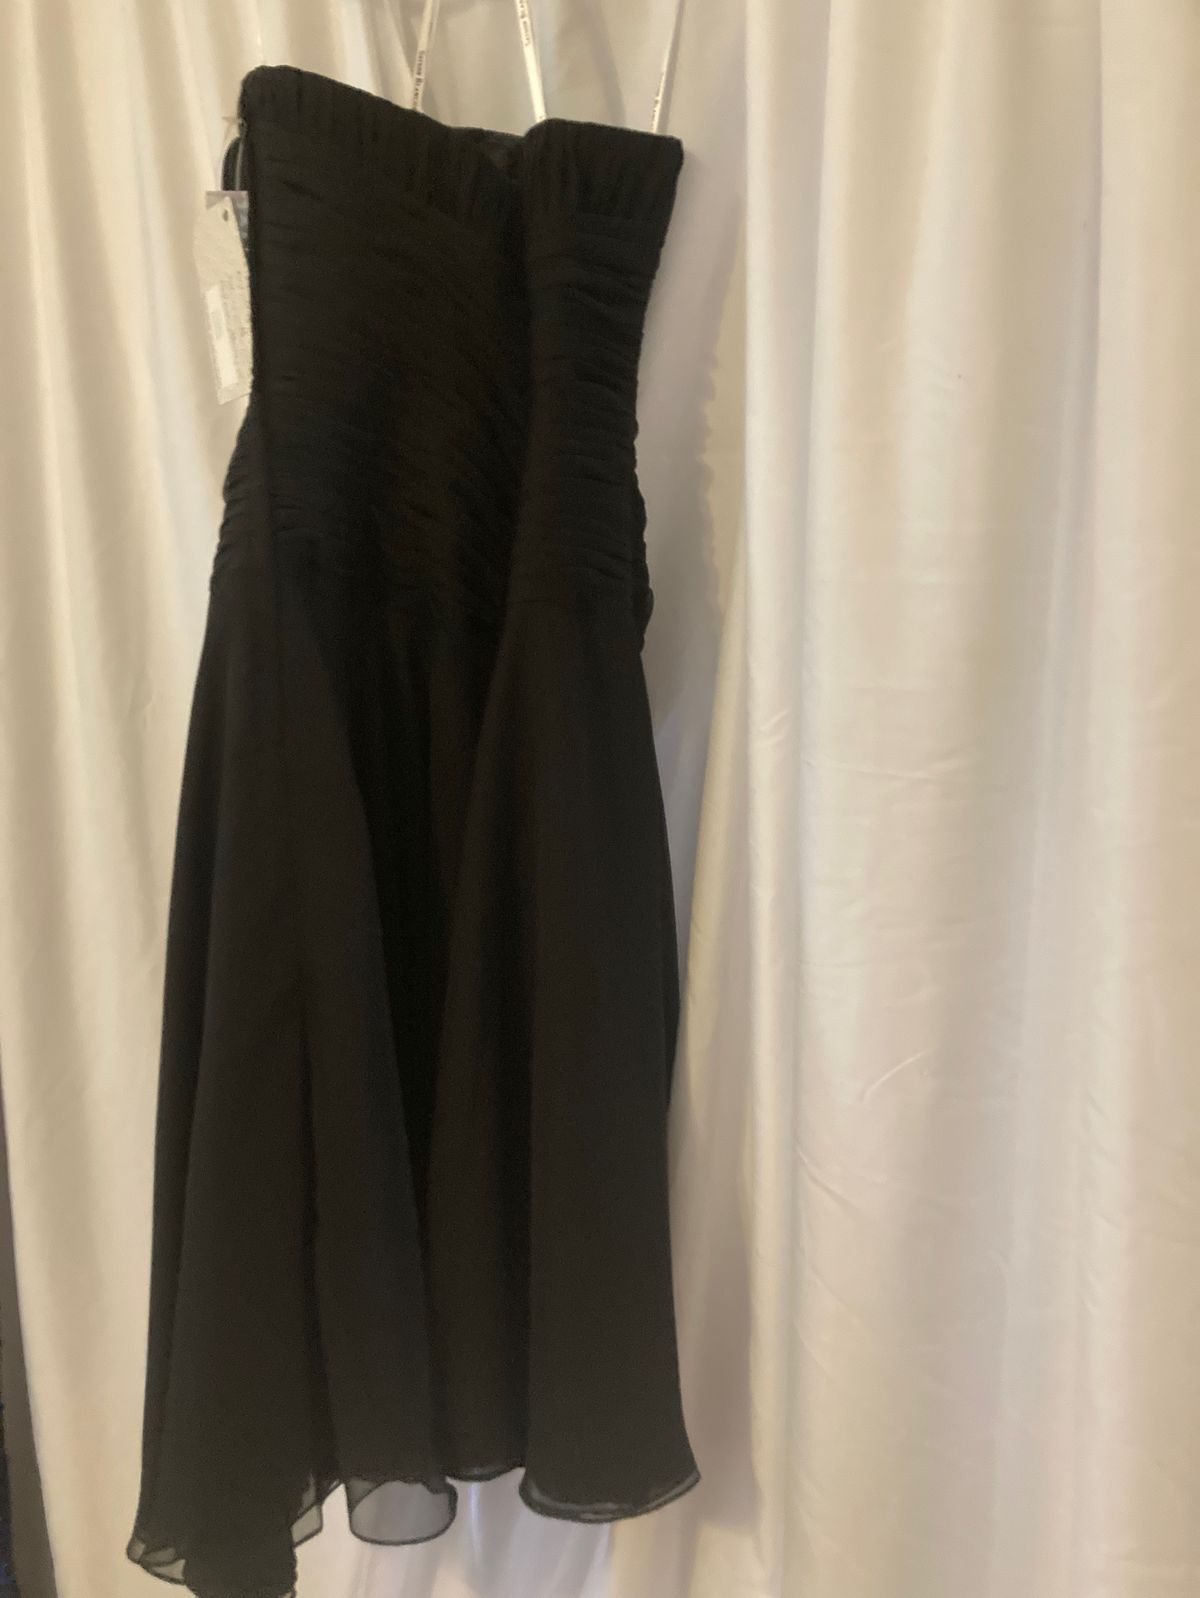 Saison Blanche Bridesmaids Size 10 Bridesmaid Black Cocktail Dress on Queenly